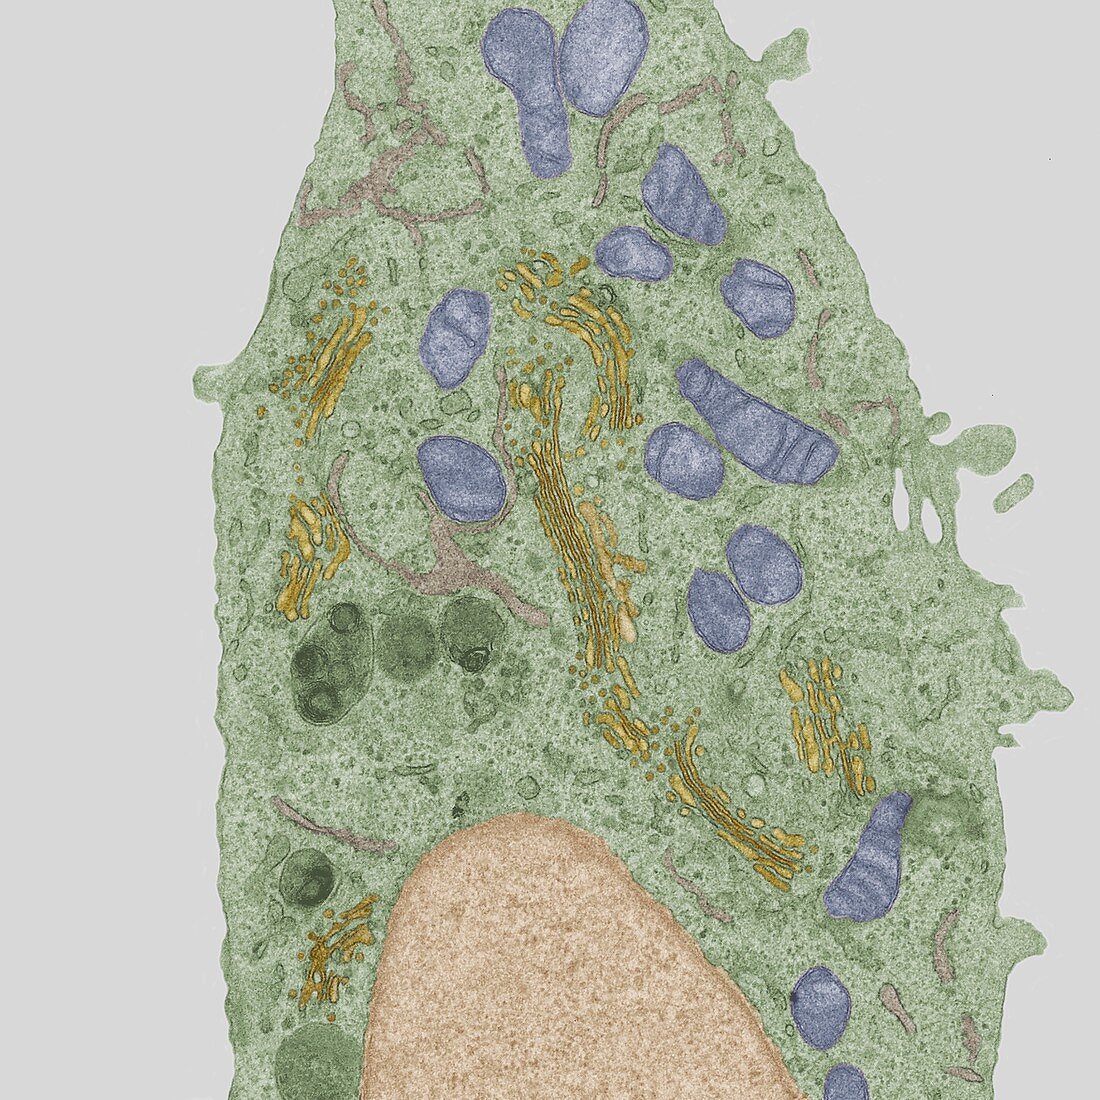 Mammalian cell, TEM